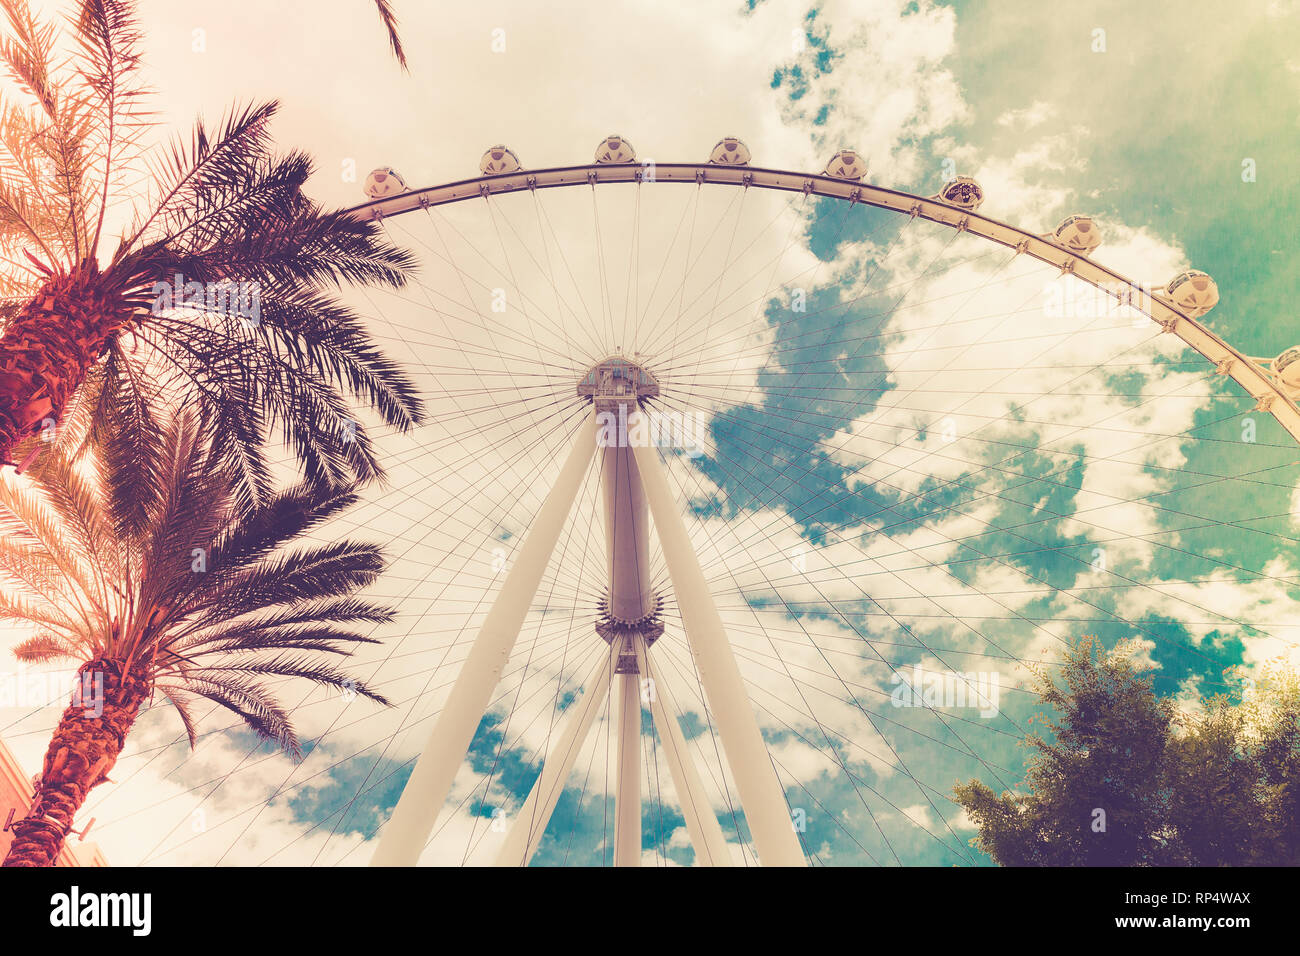 High Roller Ferris wheel with vintage retro filter, Las Vegas Nevada Stock Photo